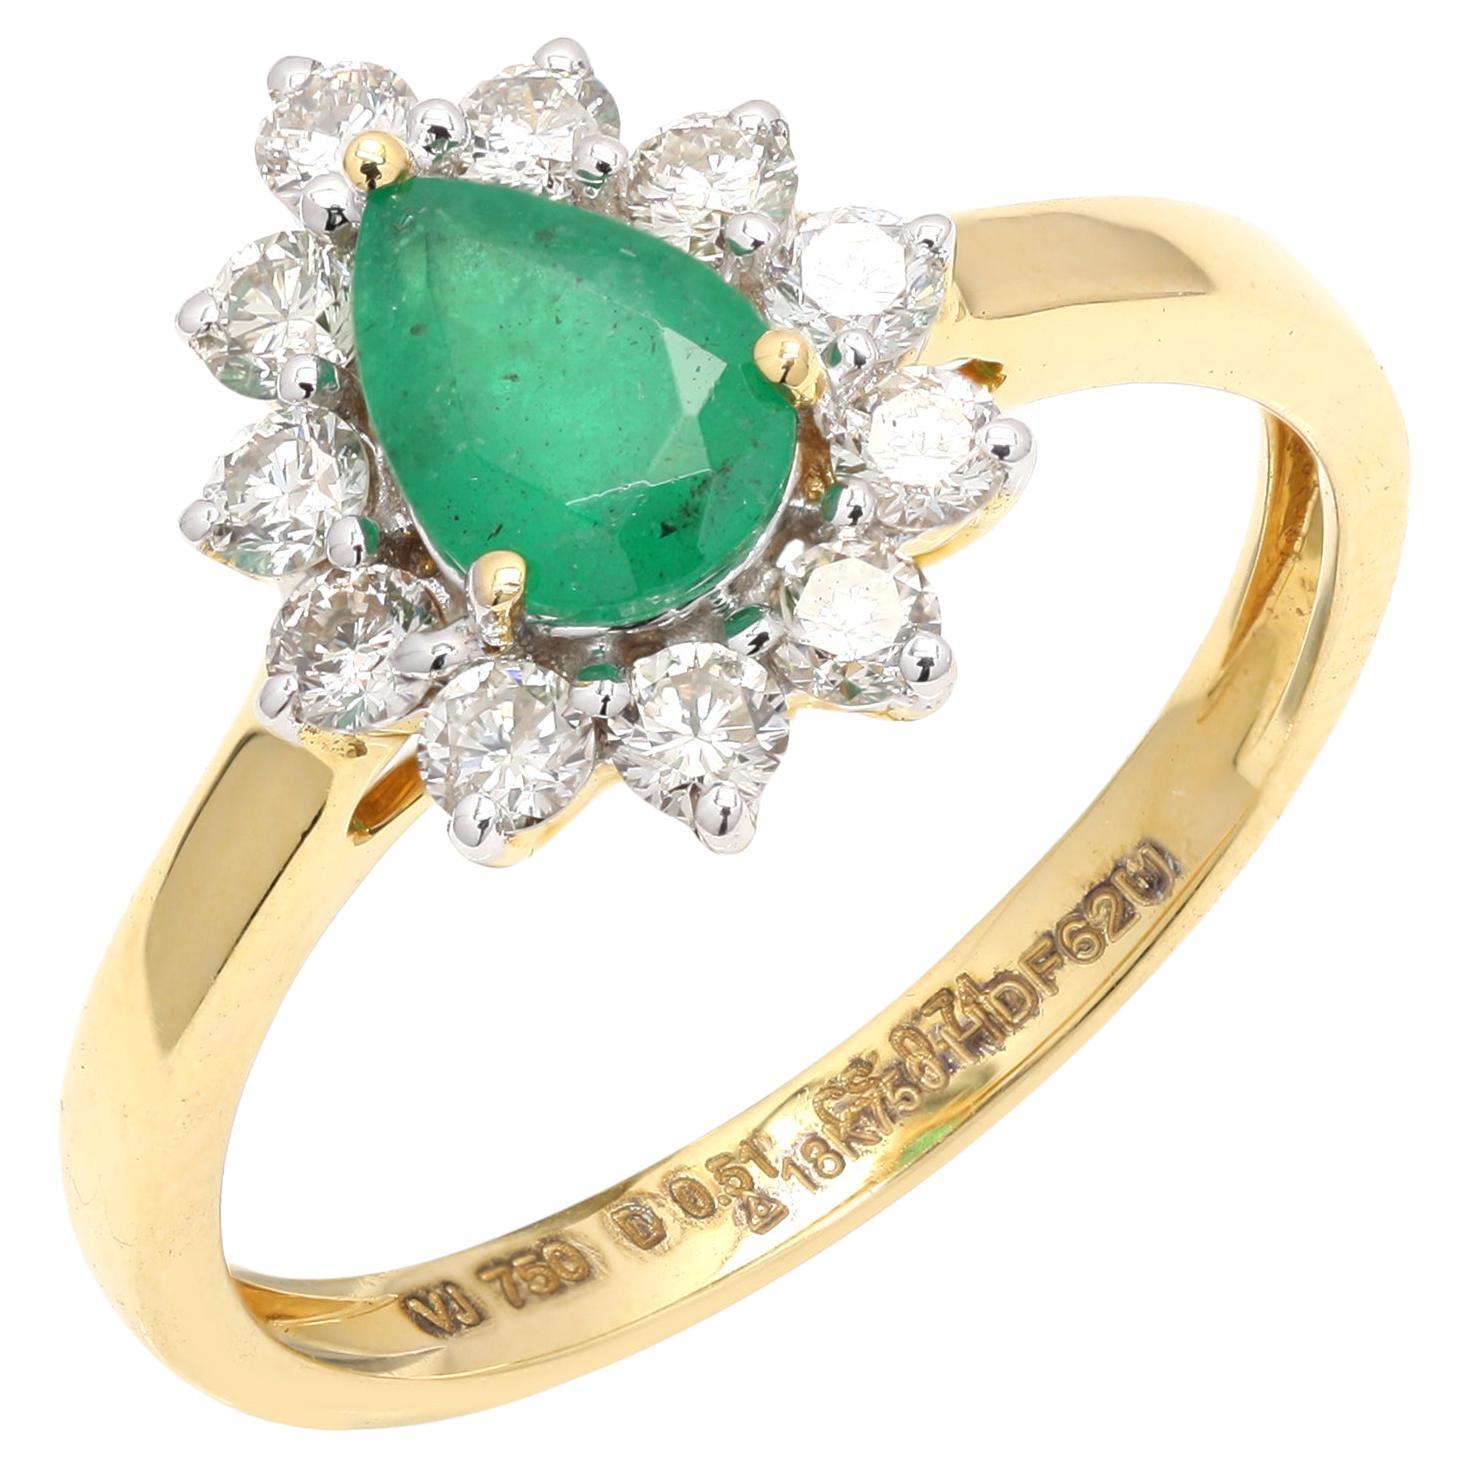 For Sale:  18k Yellow Gold Classic Halo Diamond Pear Cut Emerald Wedding Ring